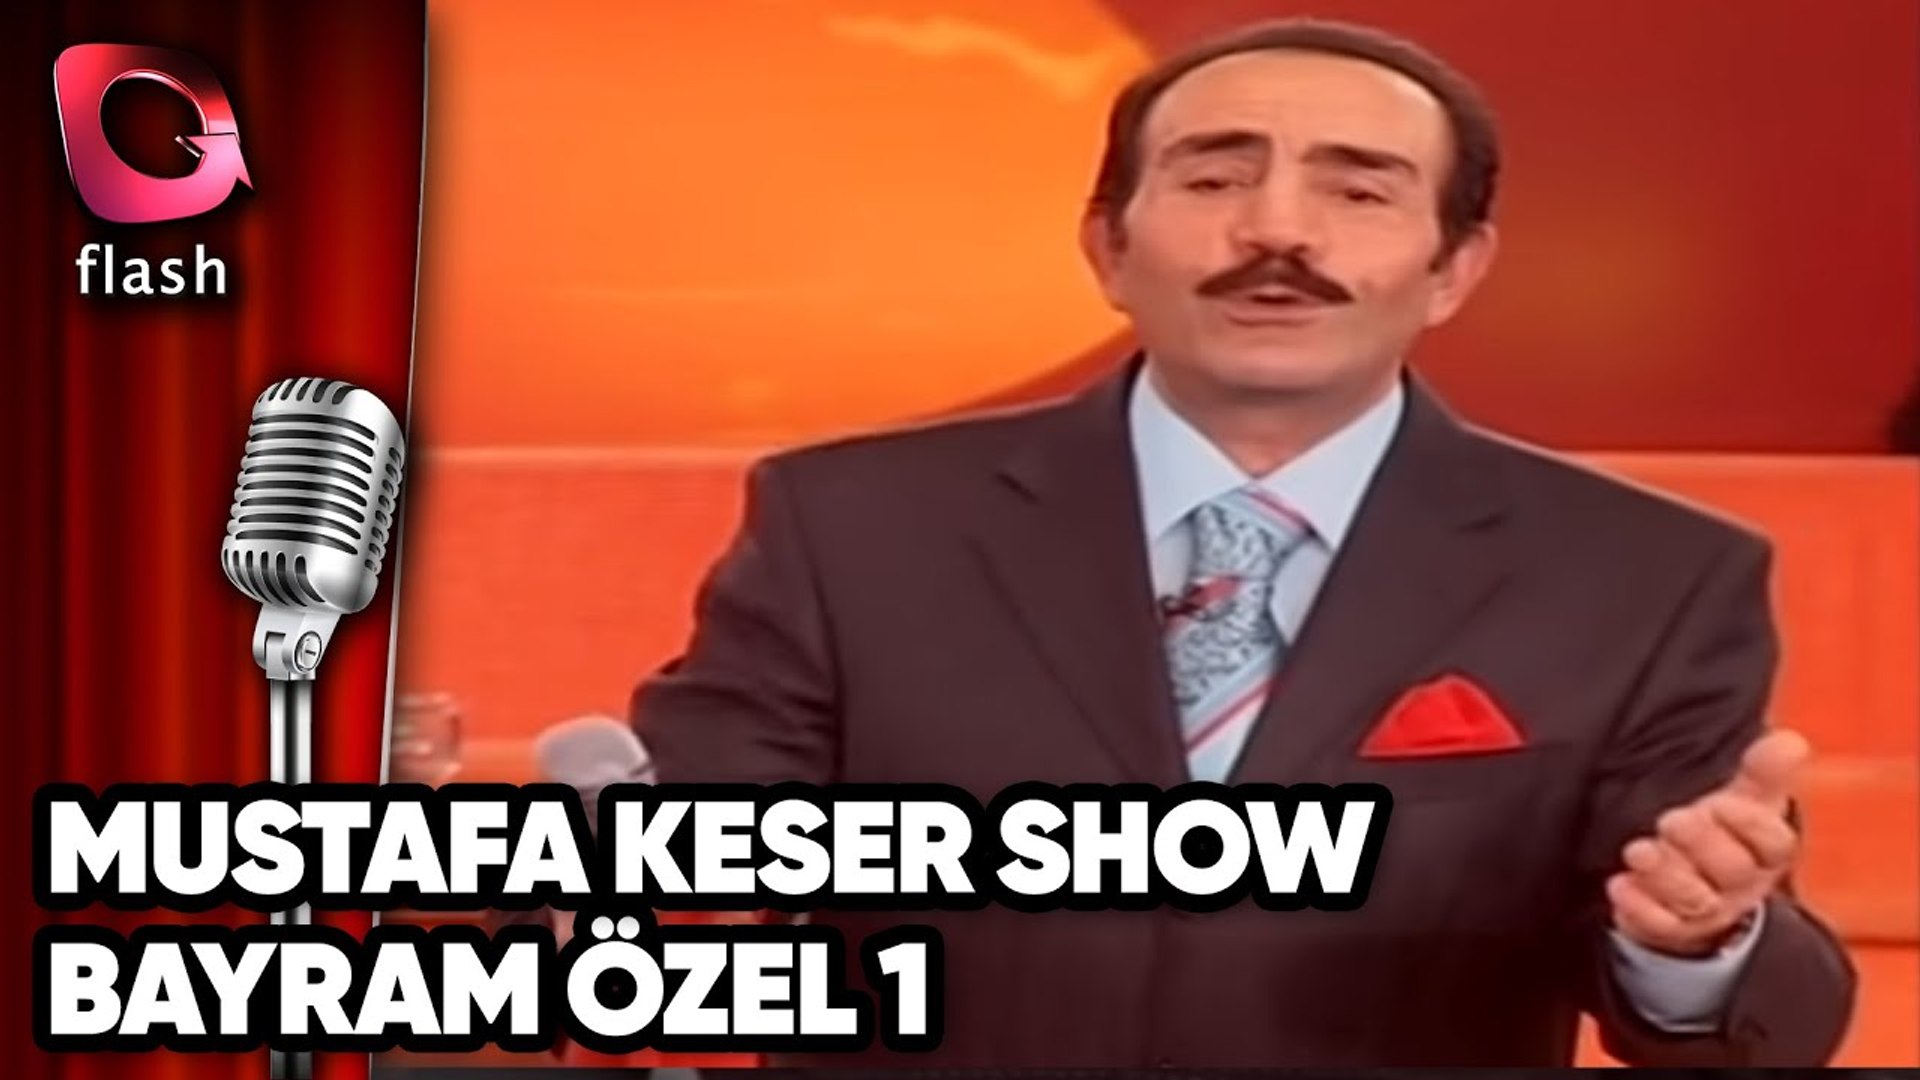 Mustafa Keser Show - Bayram Özel 1 - Flash Tv - Dailymotion Video